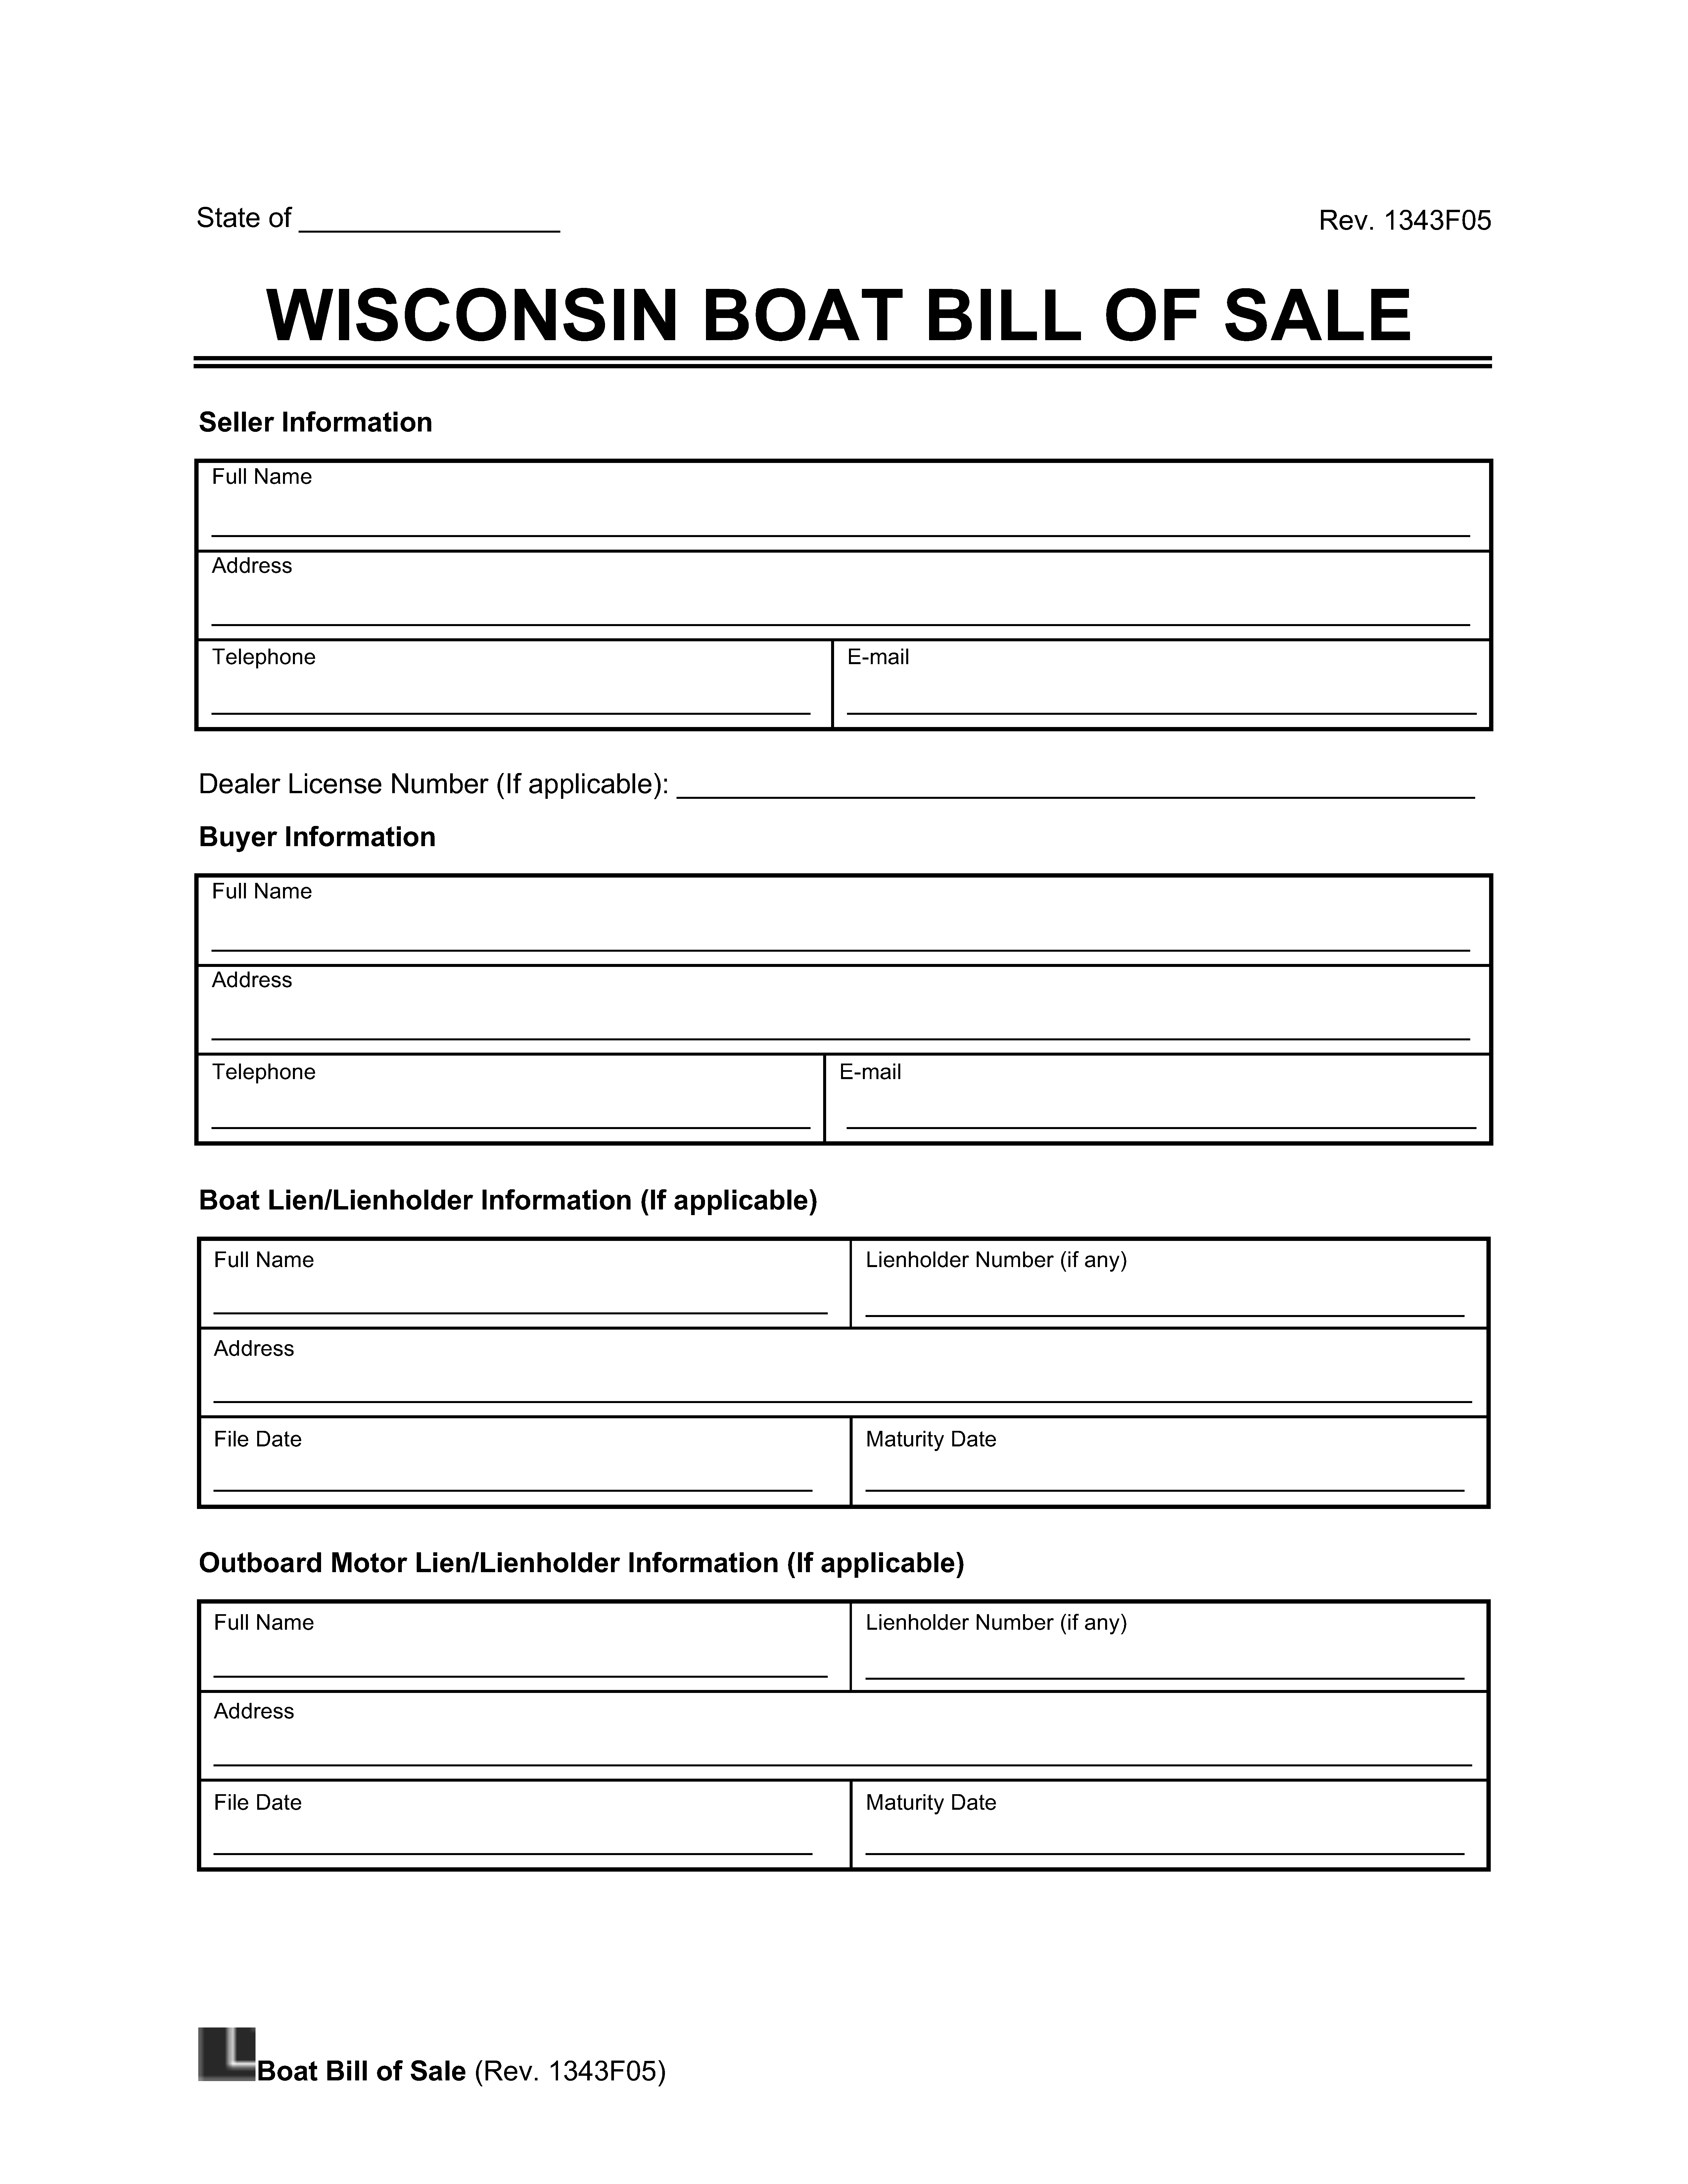 Boat Bill of Sale Wisconsin screenshot